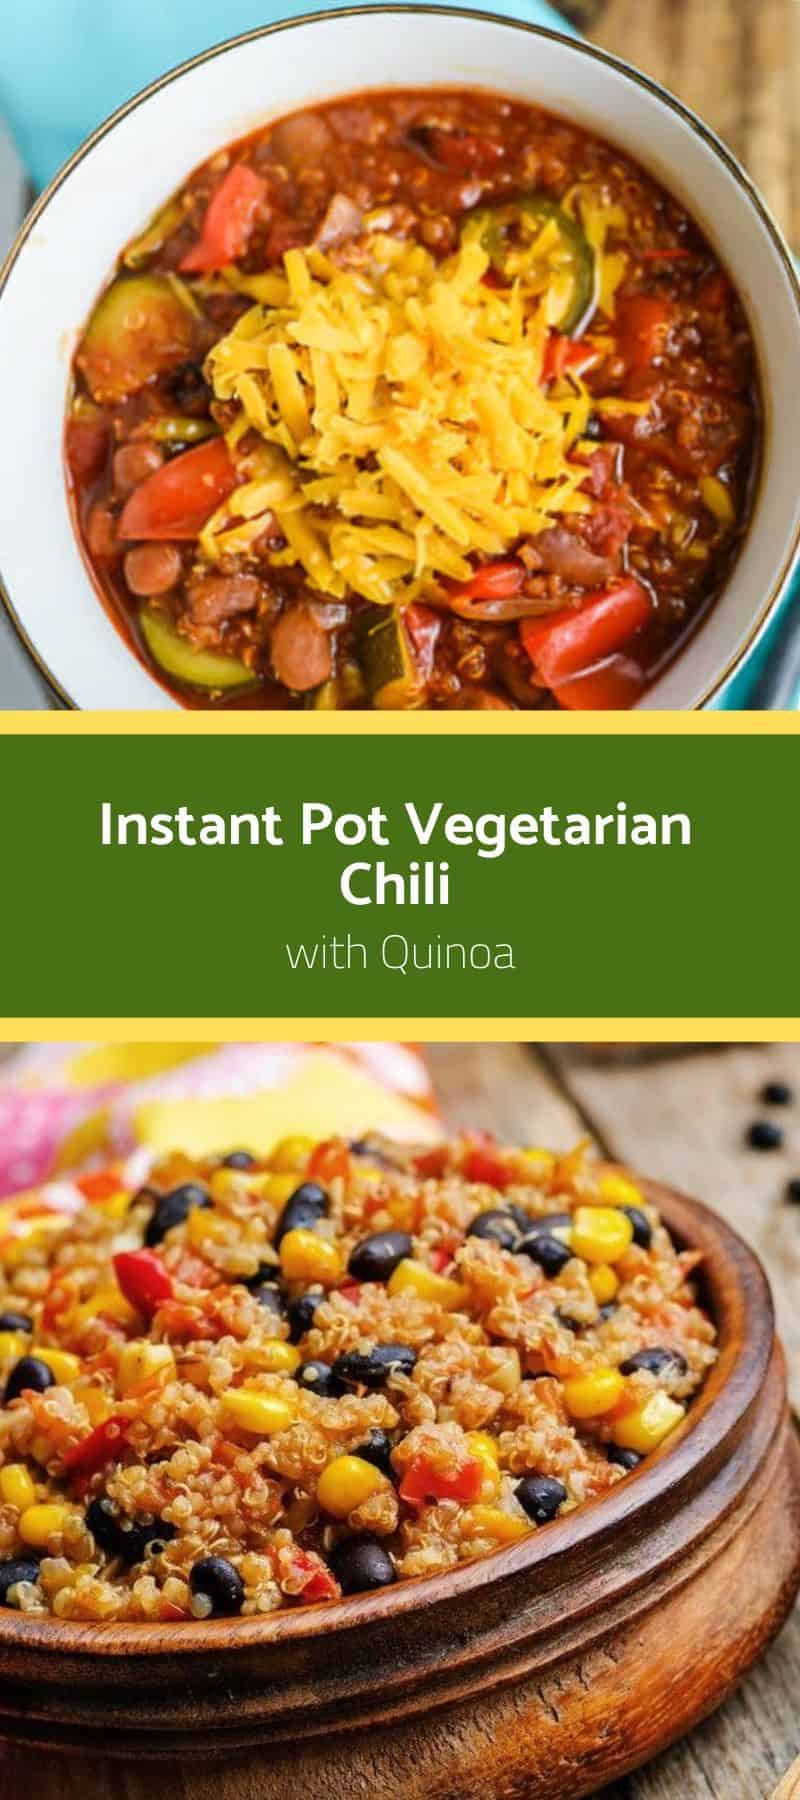 Instant Pot Vegetarian Chili with Quinoa